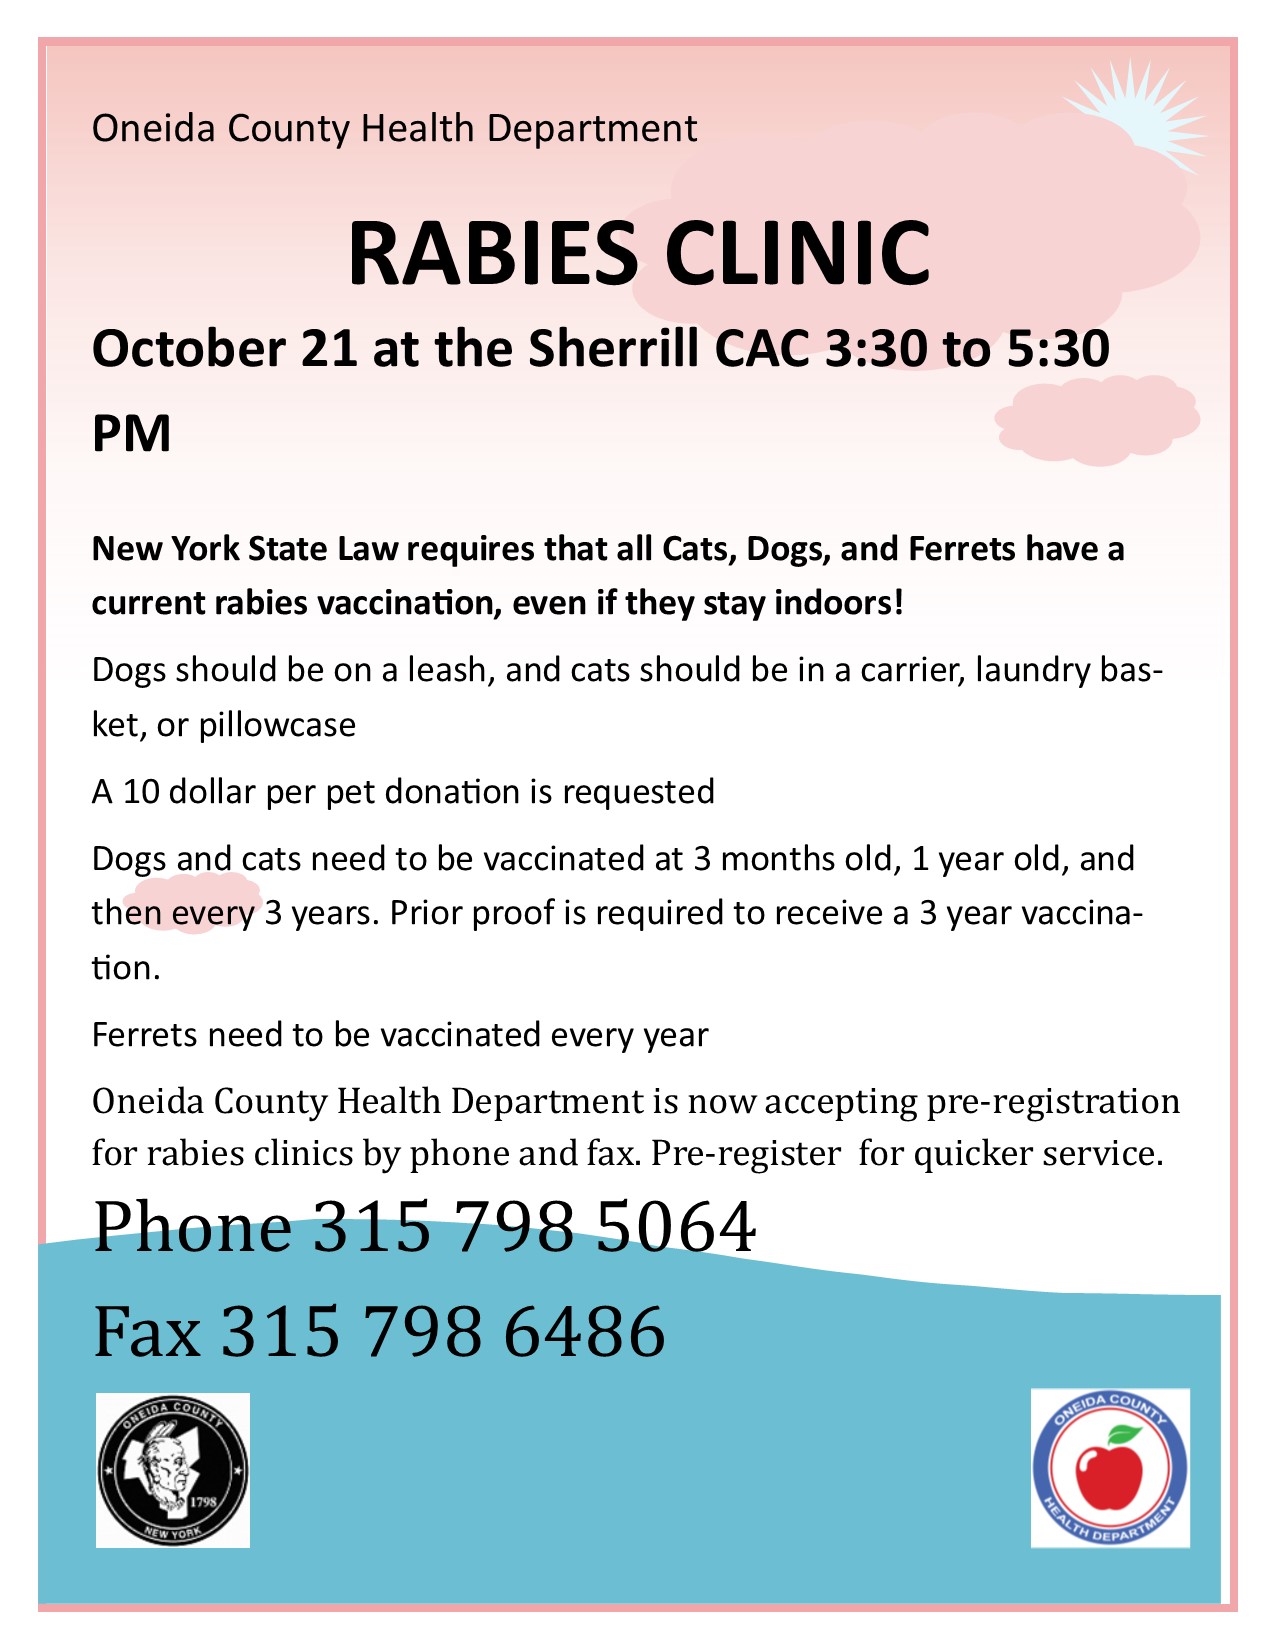 rabies clinic